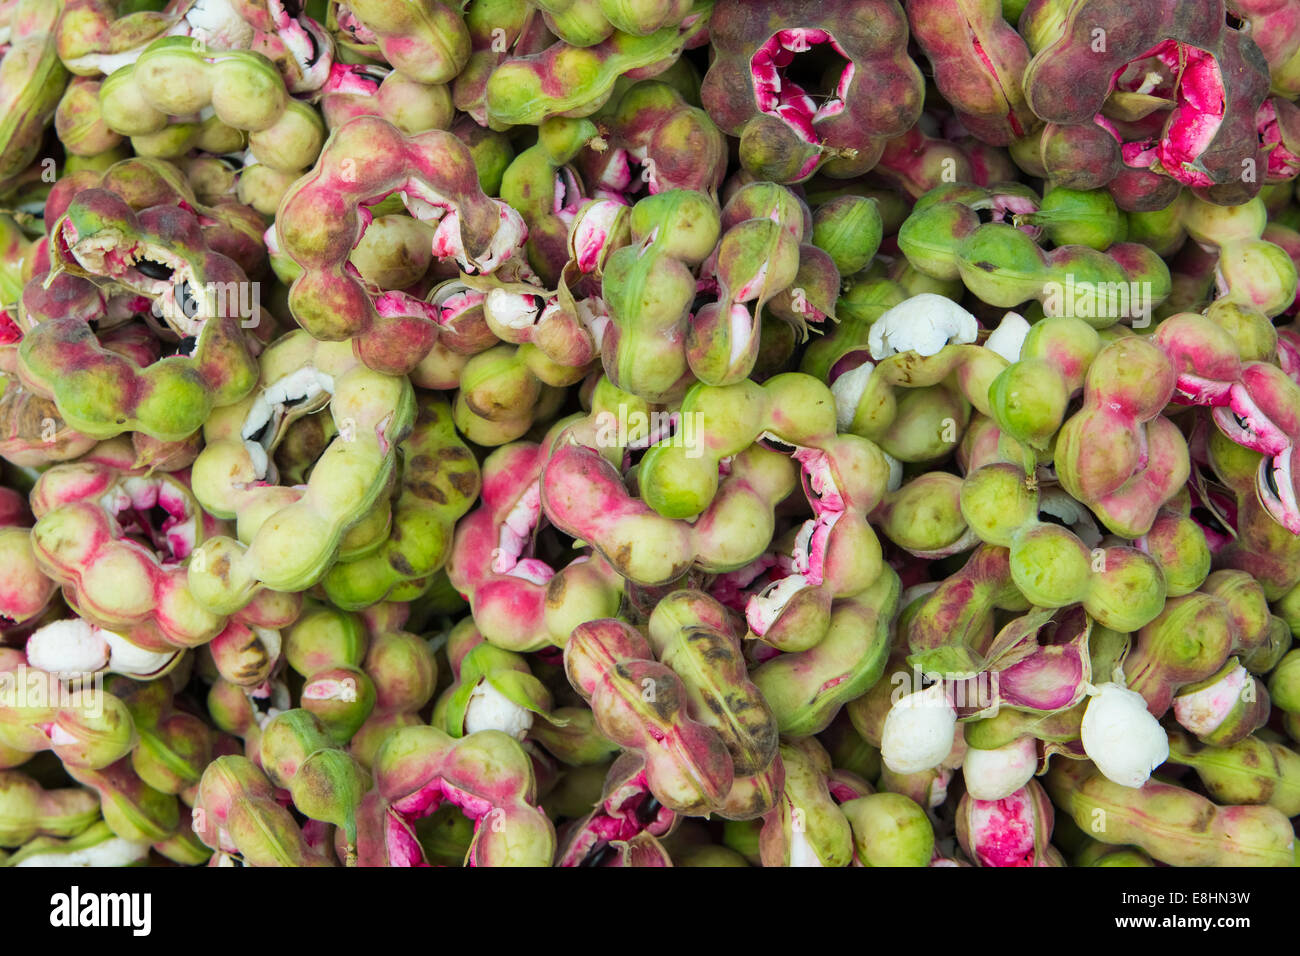 Antecedentes de frijoles verdes frescos tailandeses, vista superior Foto de stock